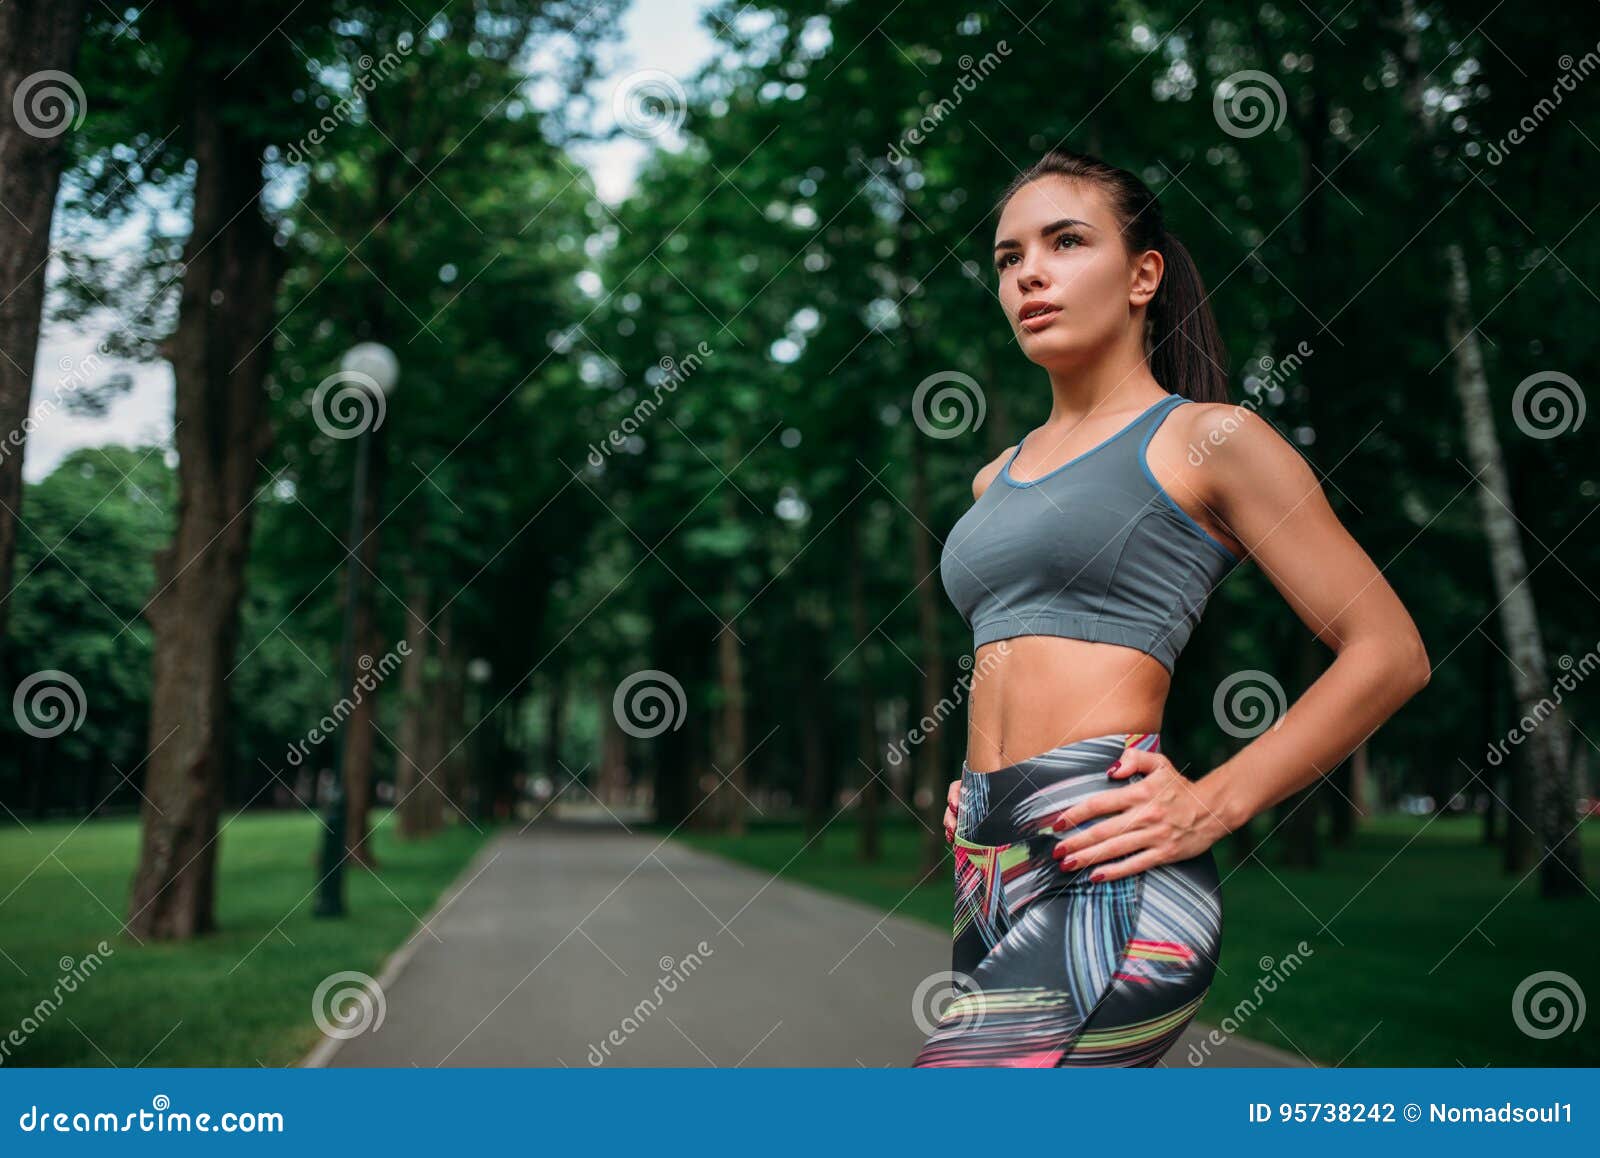 Slim Girl in Sportswear, Outdoor Fitness Training Stock Photo - Image ...